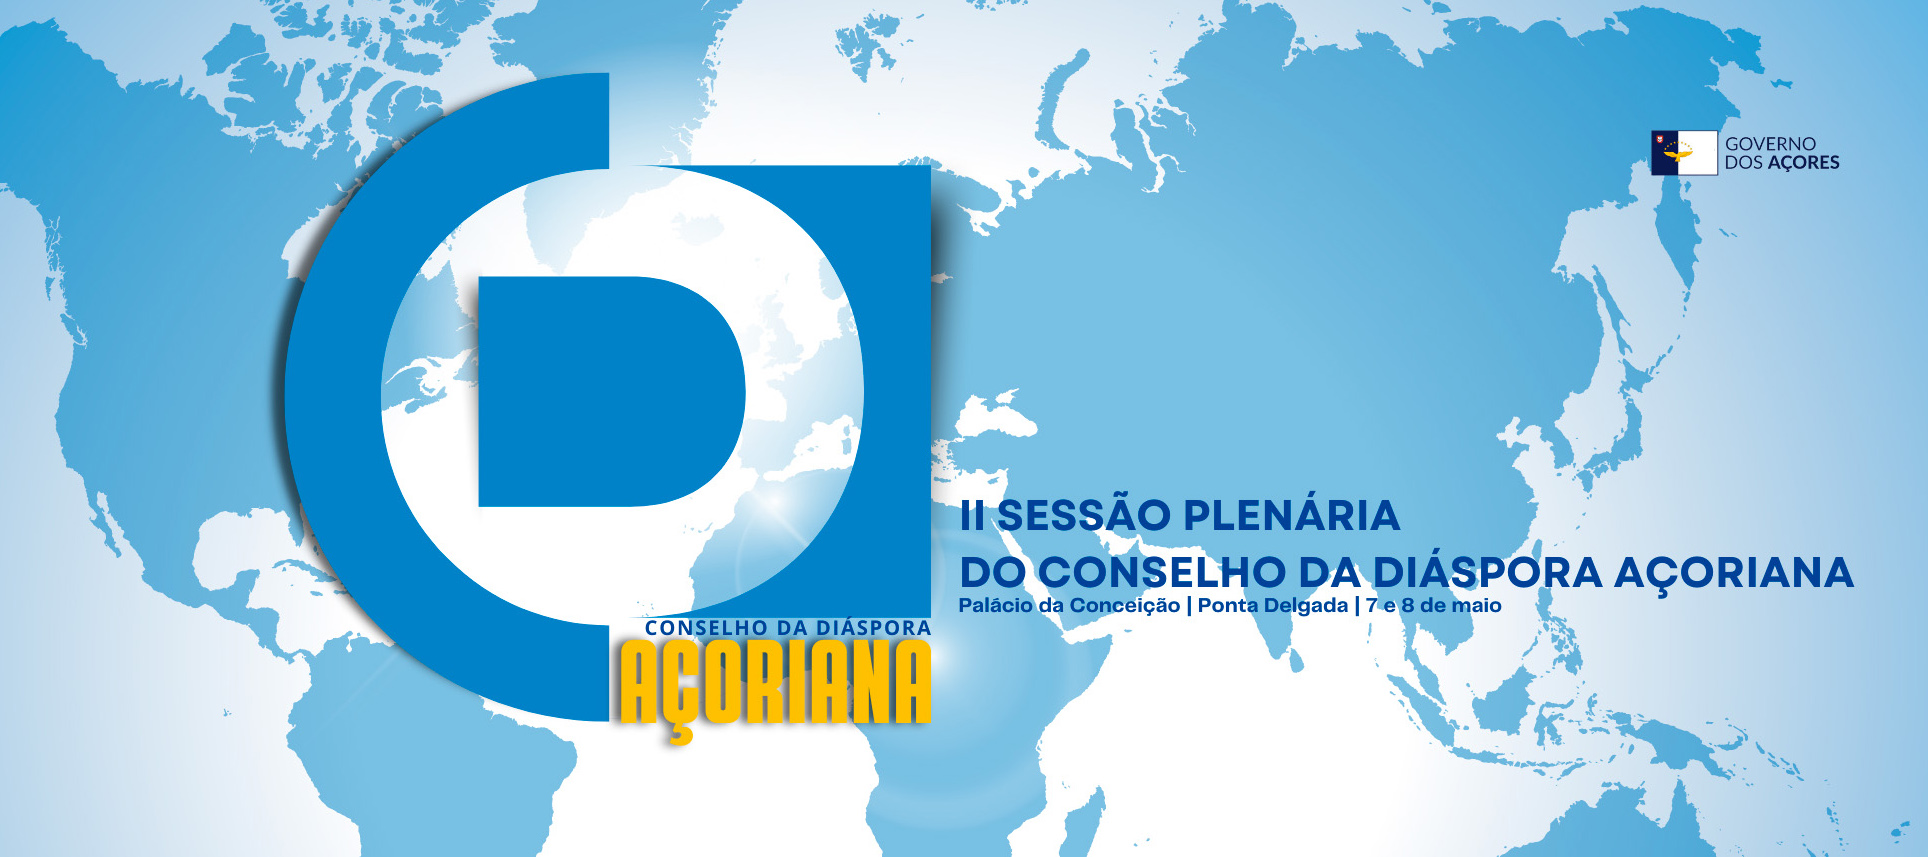 Azorean Diaspora Council meets in Ponta Delgada on May 7 and 8